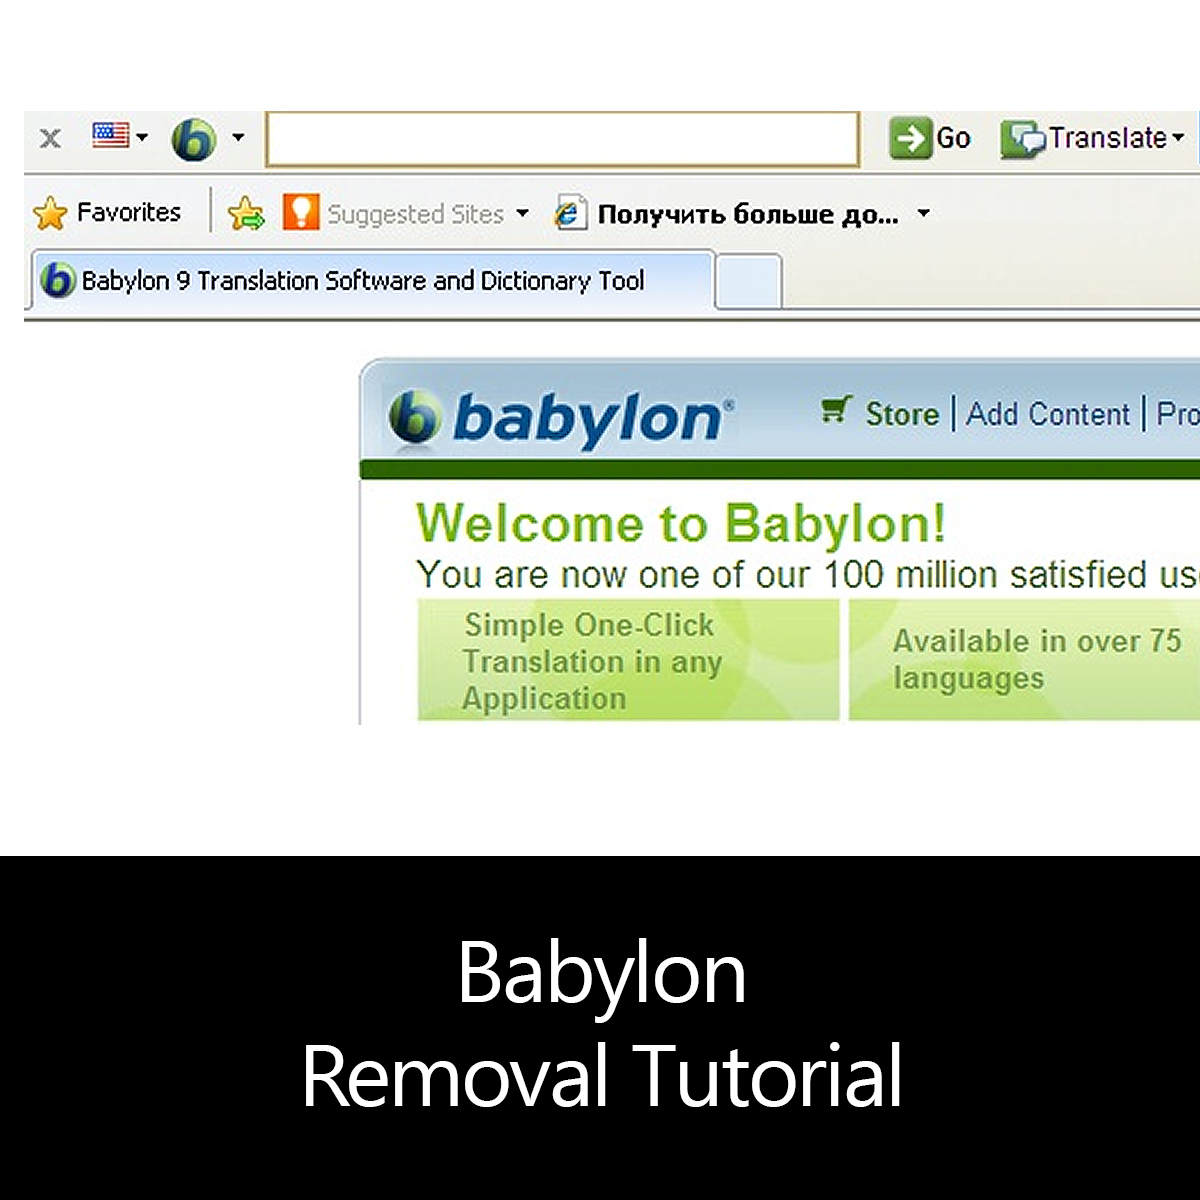 babylon 9 software